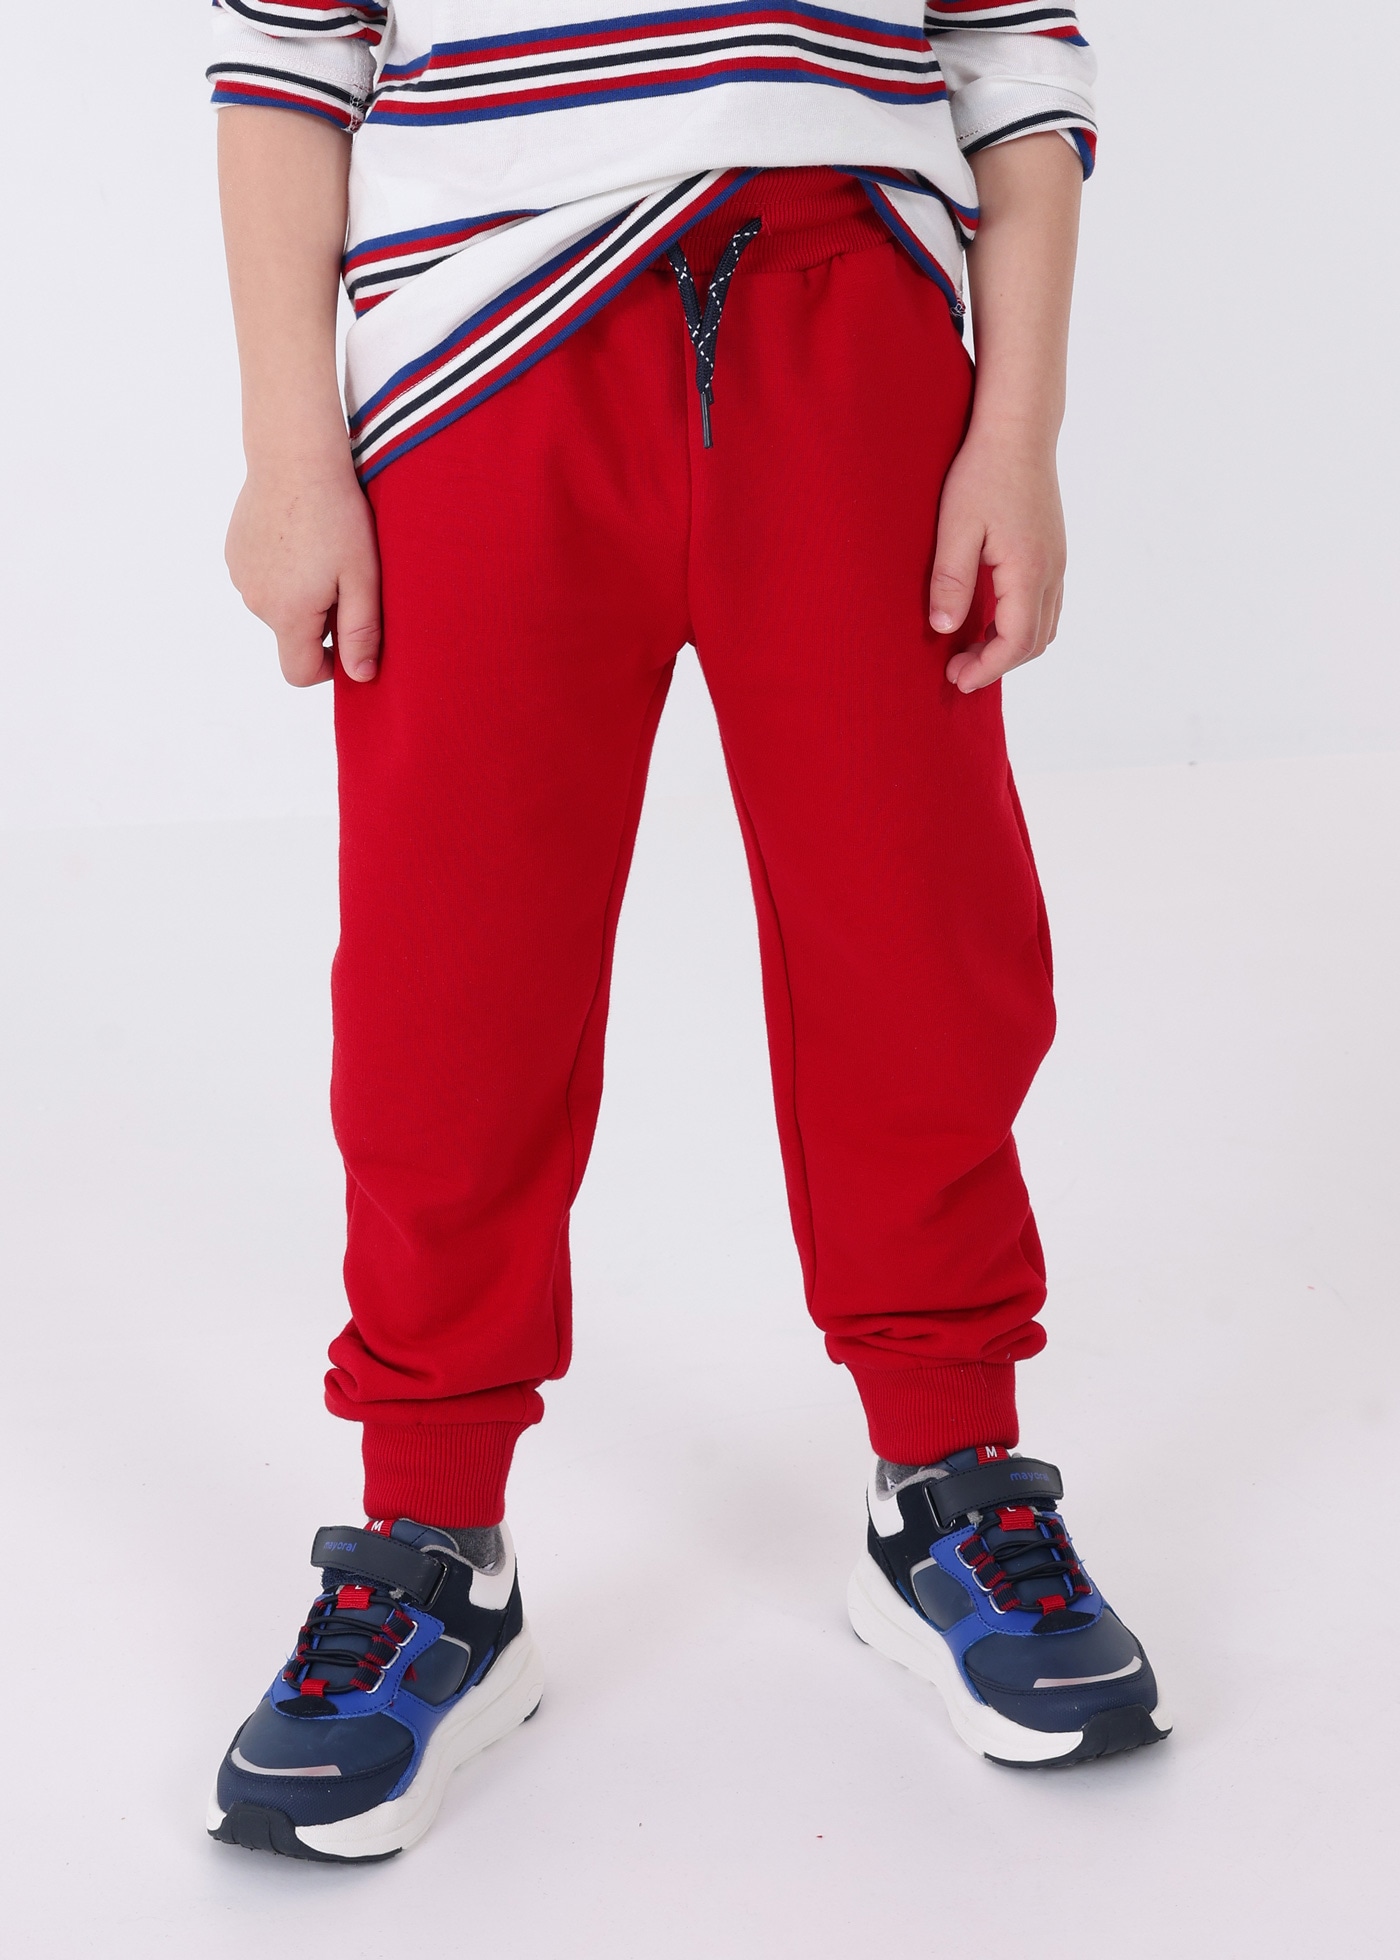 Pantalón deportivo rodilleras - Pantalones - ROPA - Niño - Niños